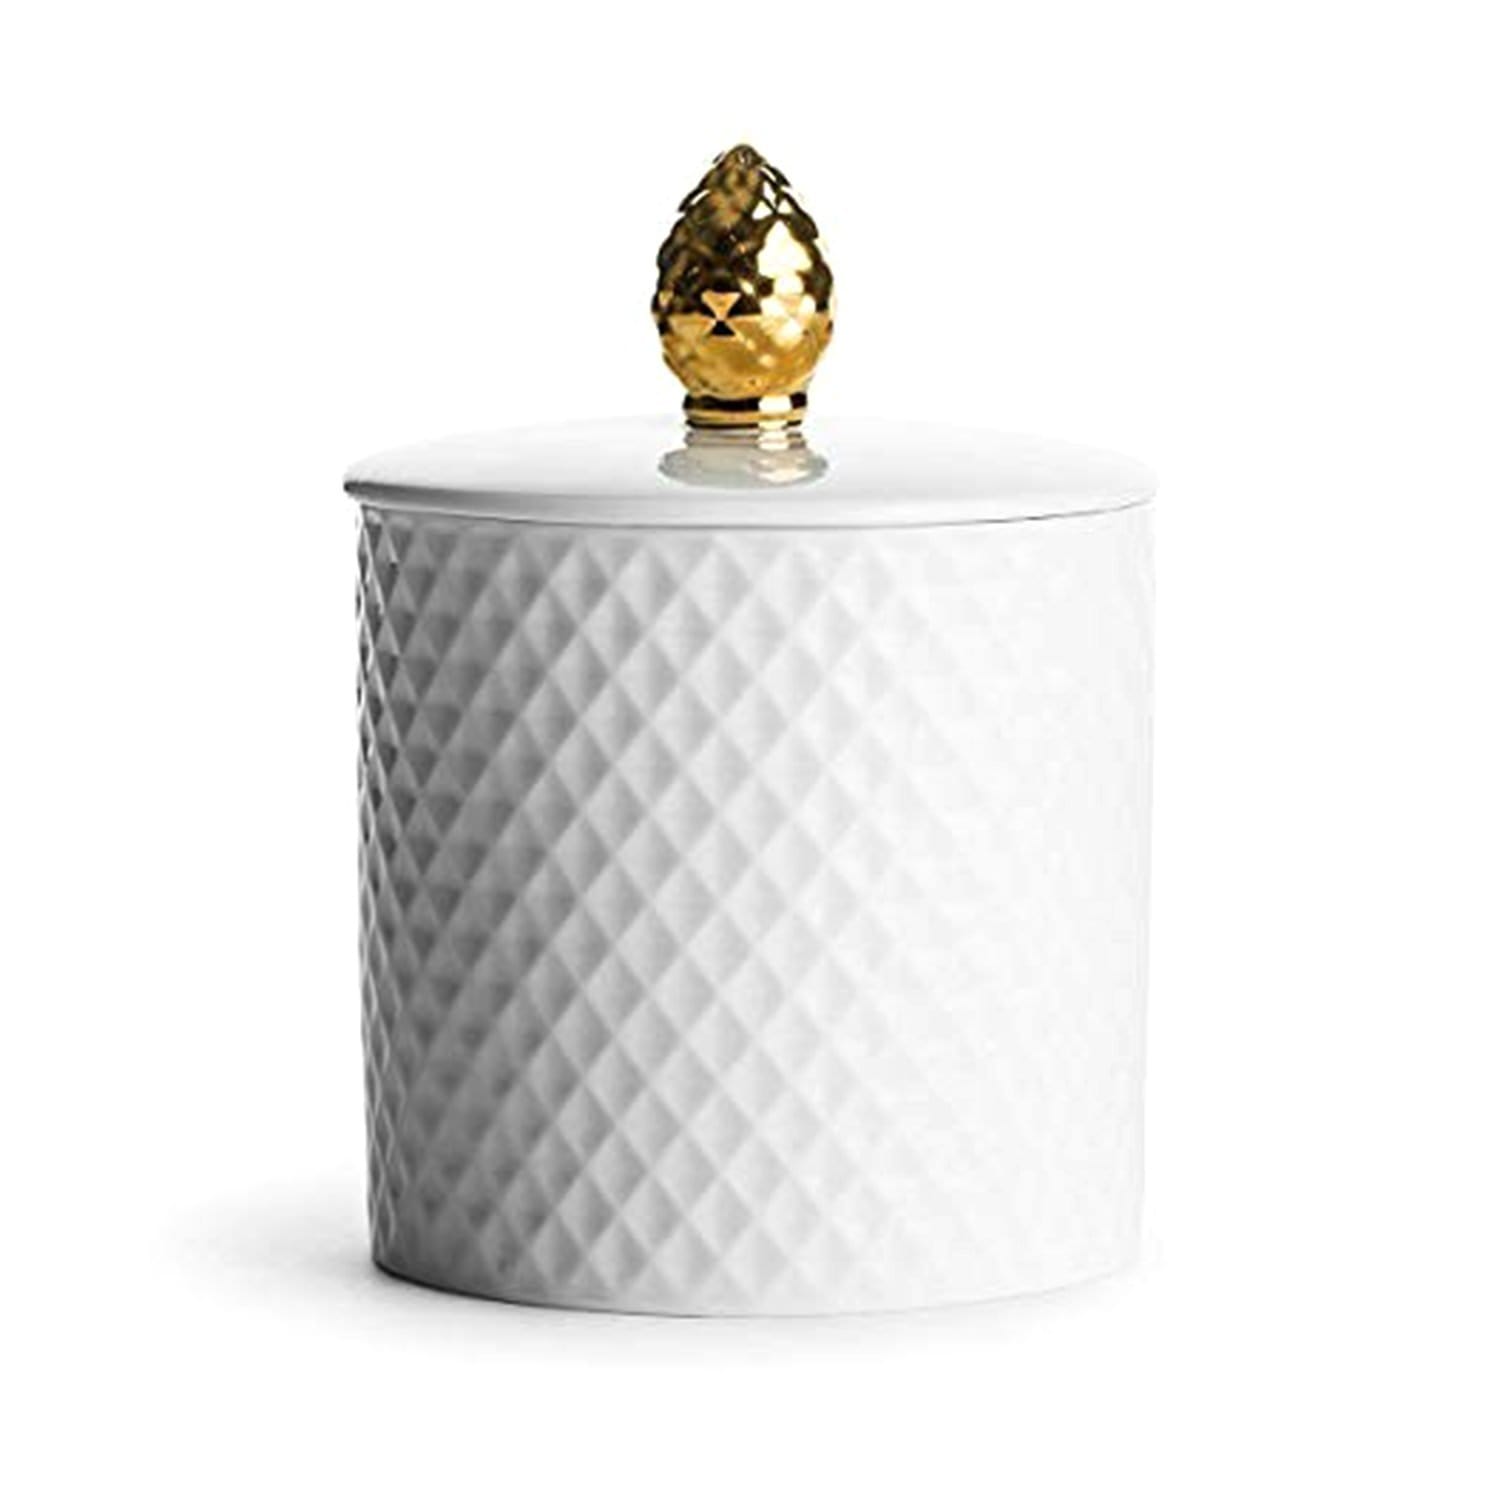 Sagaform Cone Jar - White and Gold, 450 ml - SA5017872 - Jashanmal Home